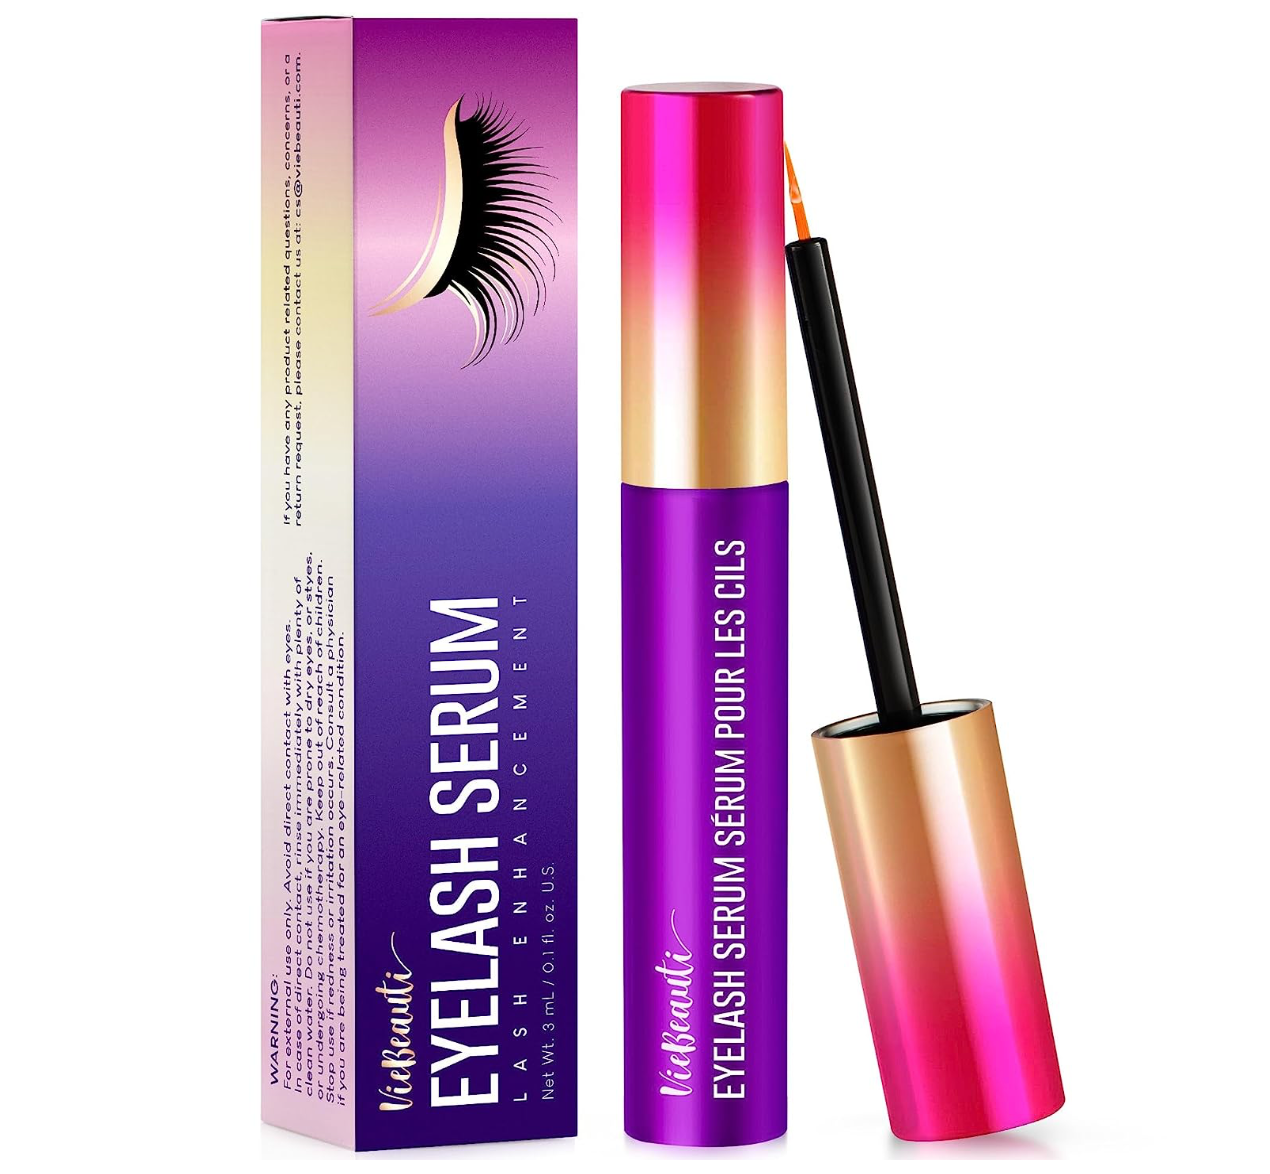 Premium Eyelash Serum by VieBeauti, Lash Boosting Serum for Longer, Fuller Thicker Looking Lashes (3ML), (Packaging May Vary)